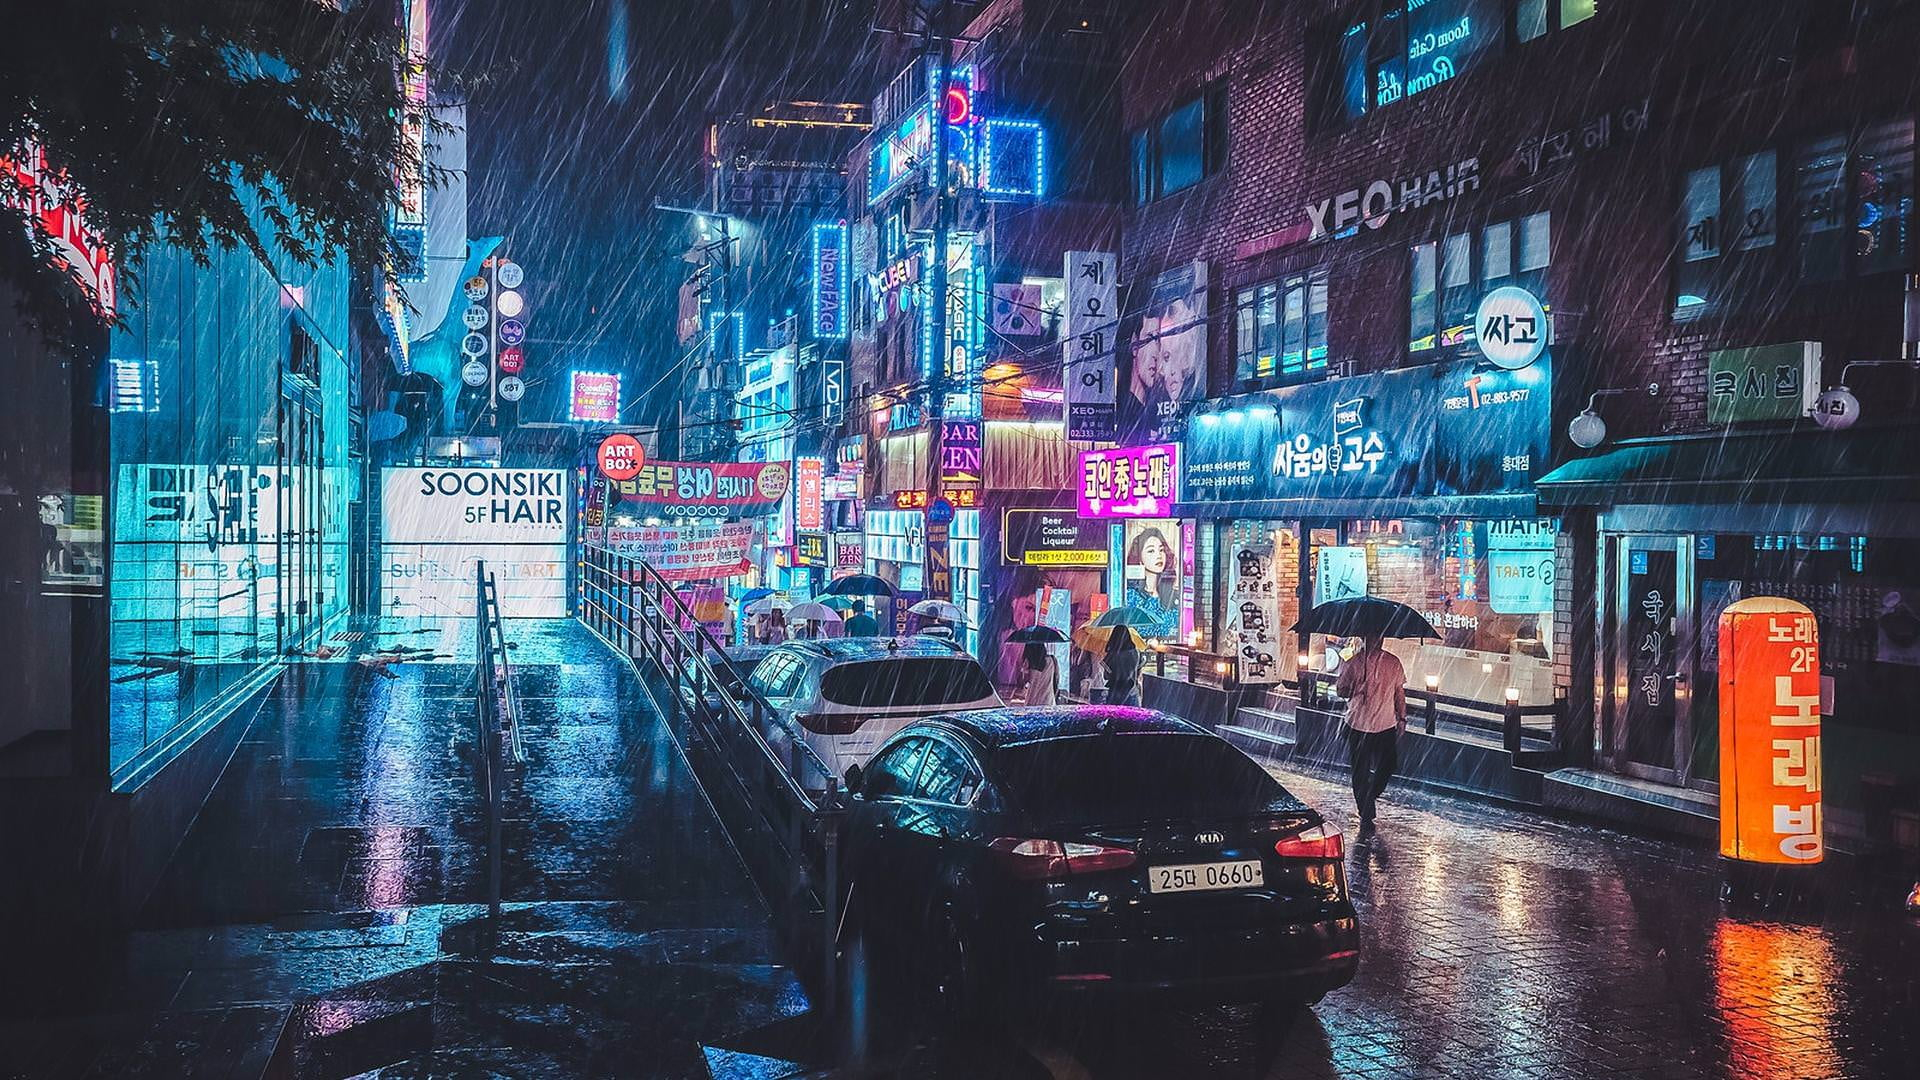 Black sedan, black car, street, neon, rain, reflection, Korean